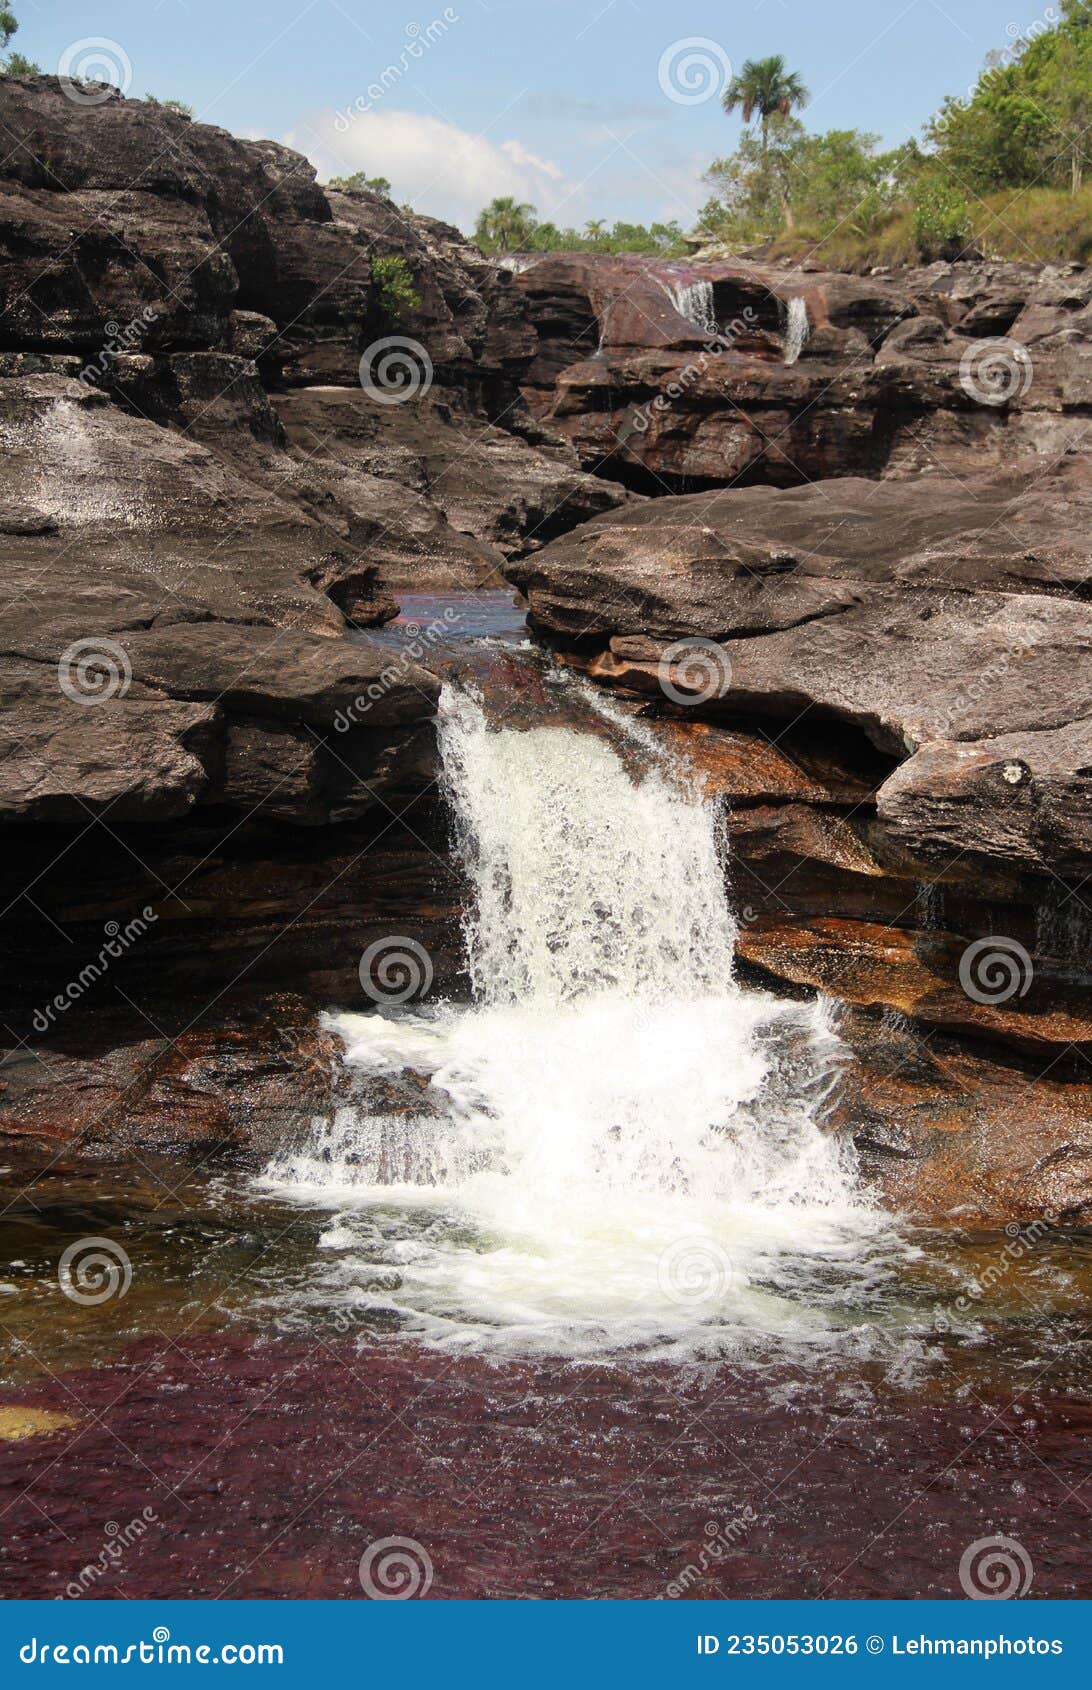 cano cristales waterfall rocky drop